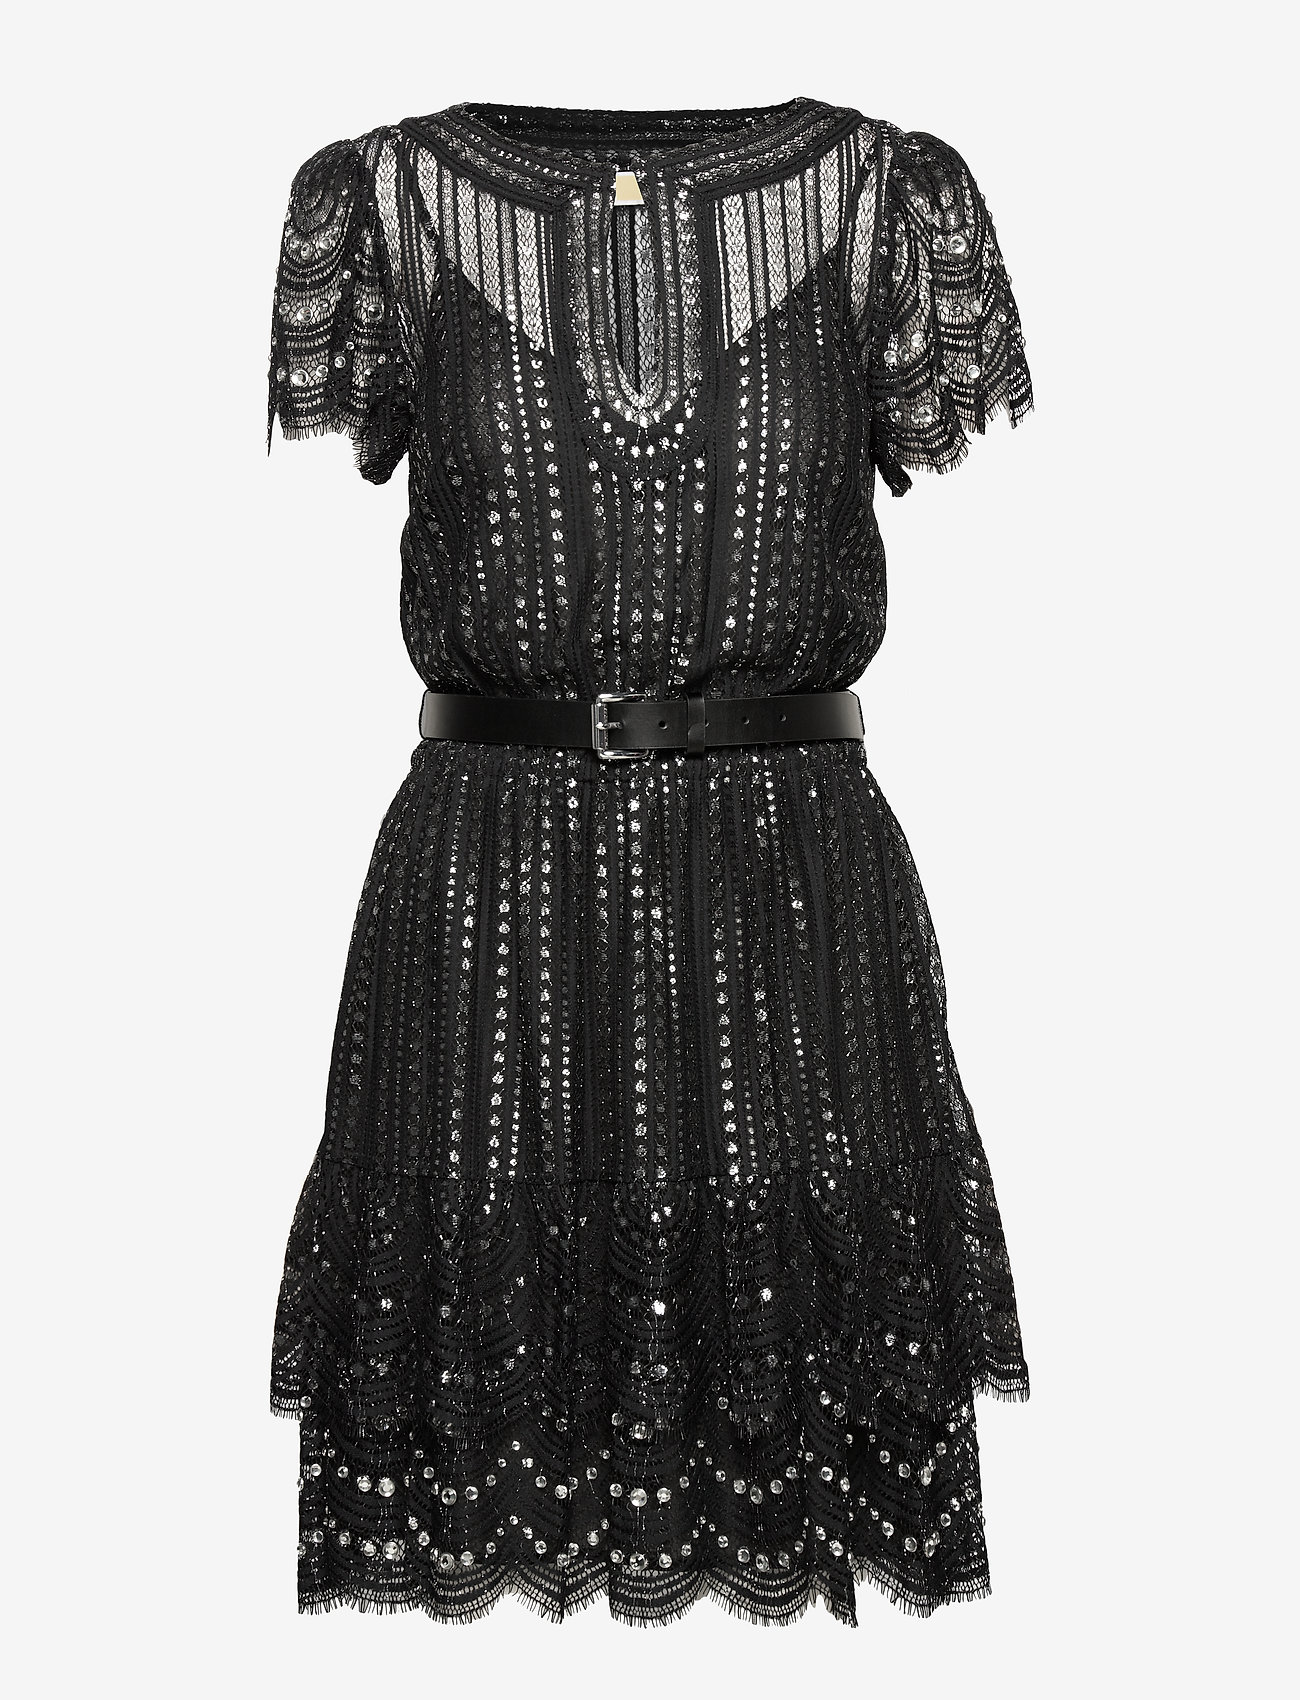 Michael Kors Black And Silver Dress ...